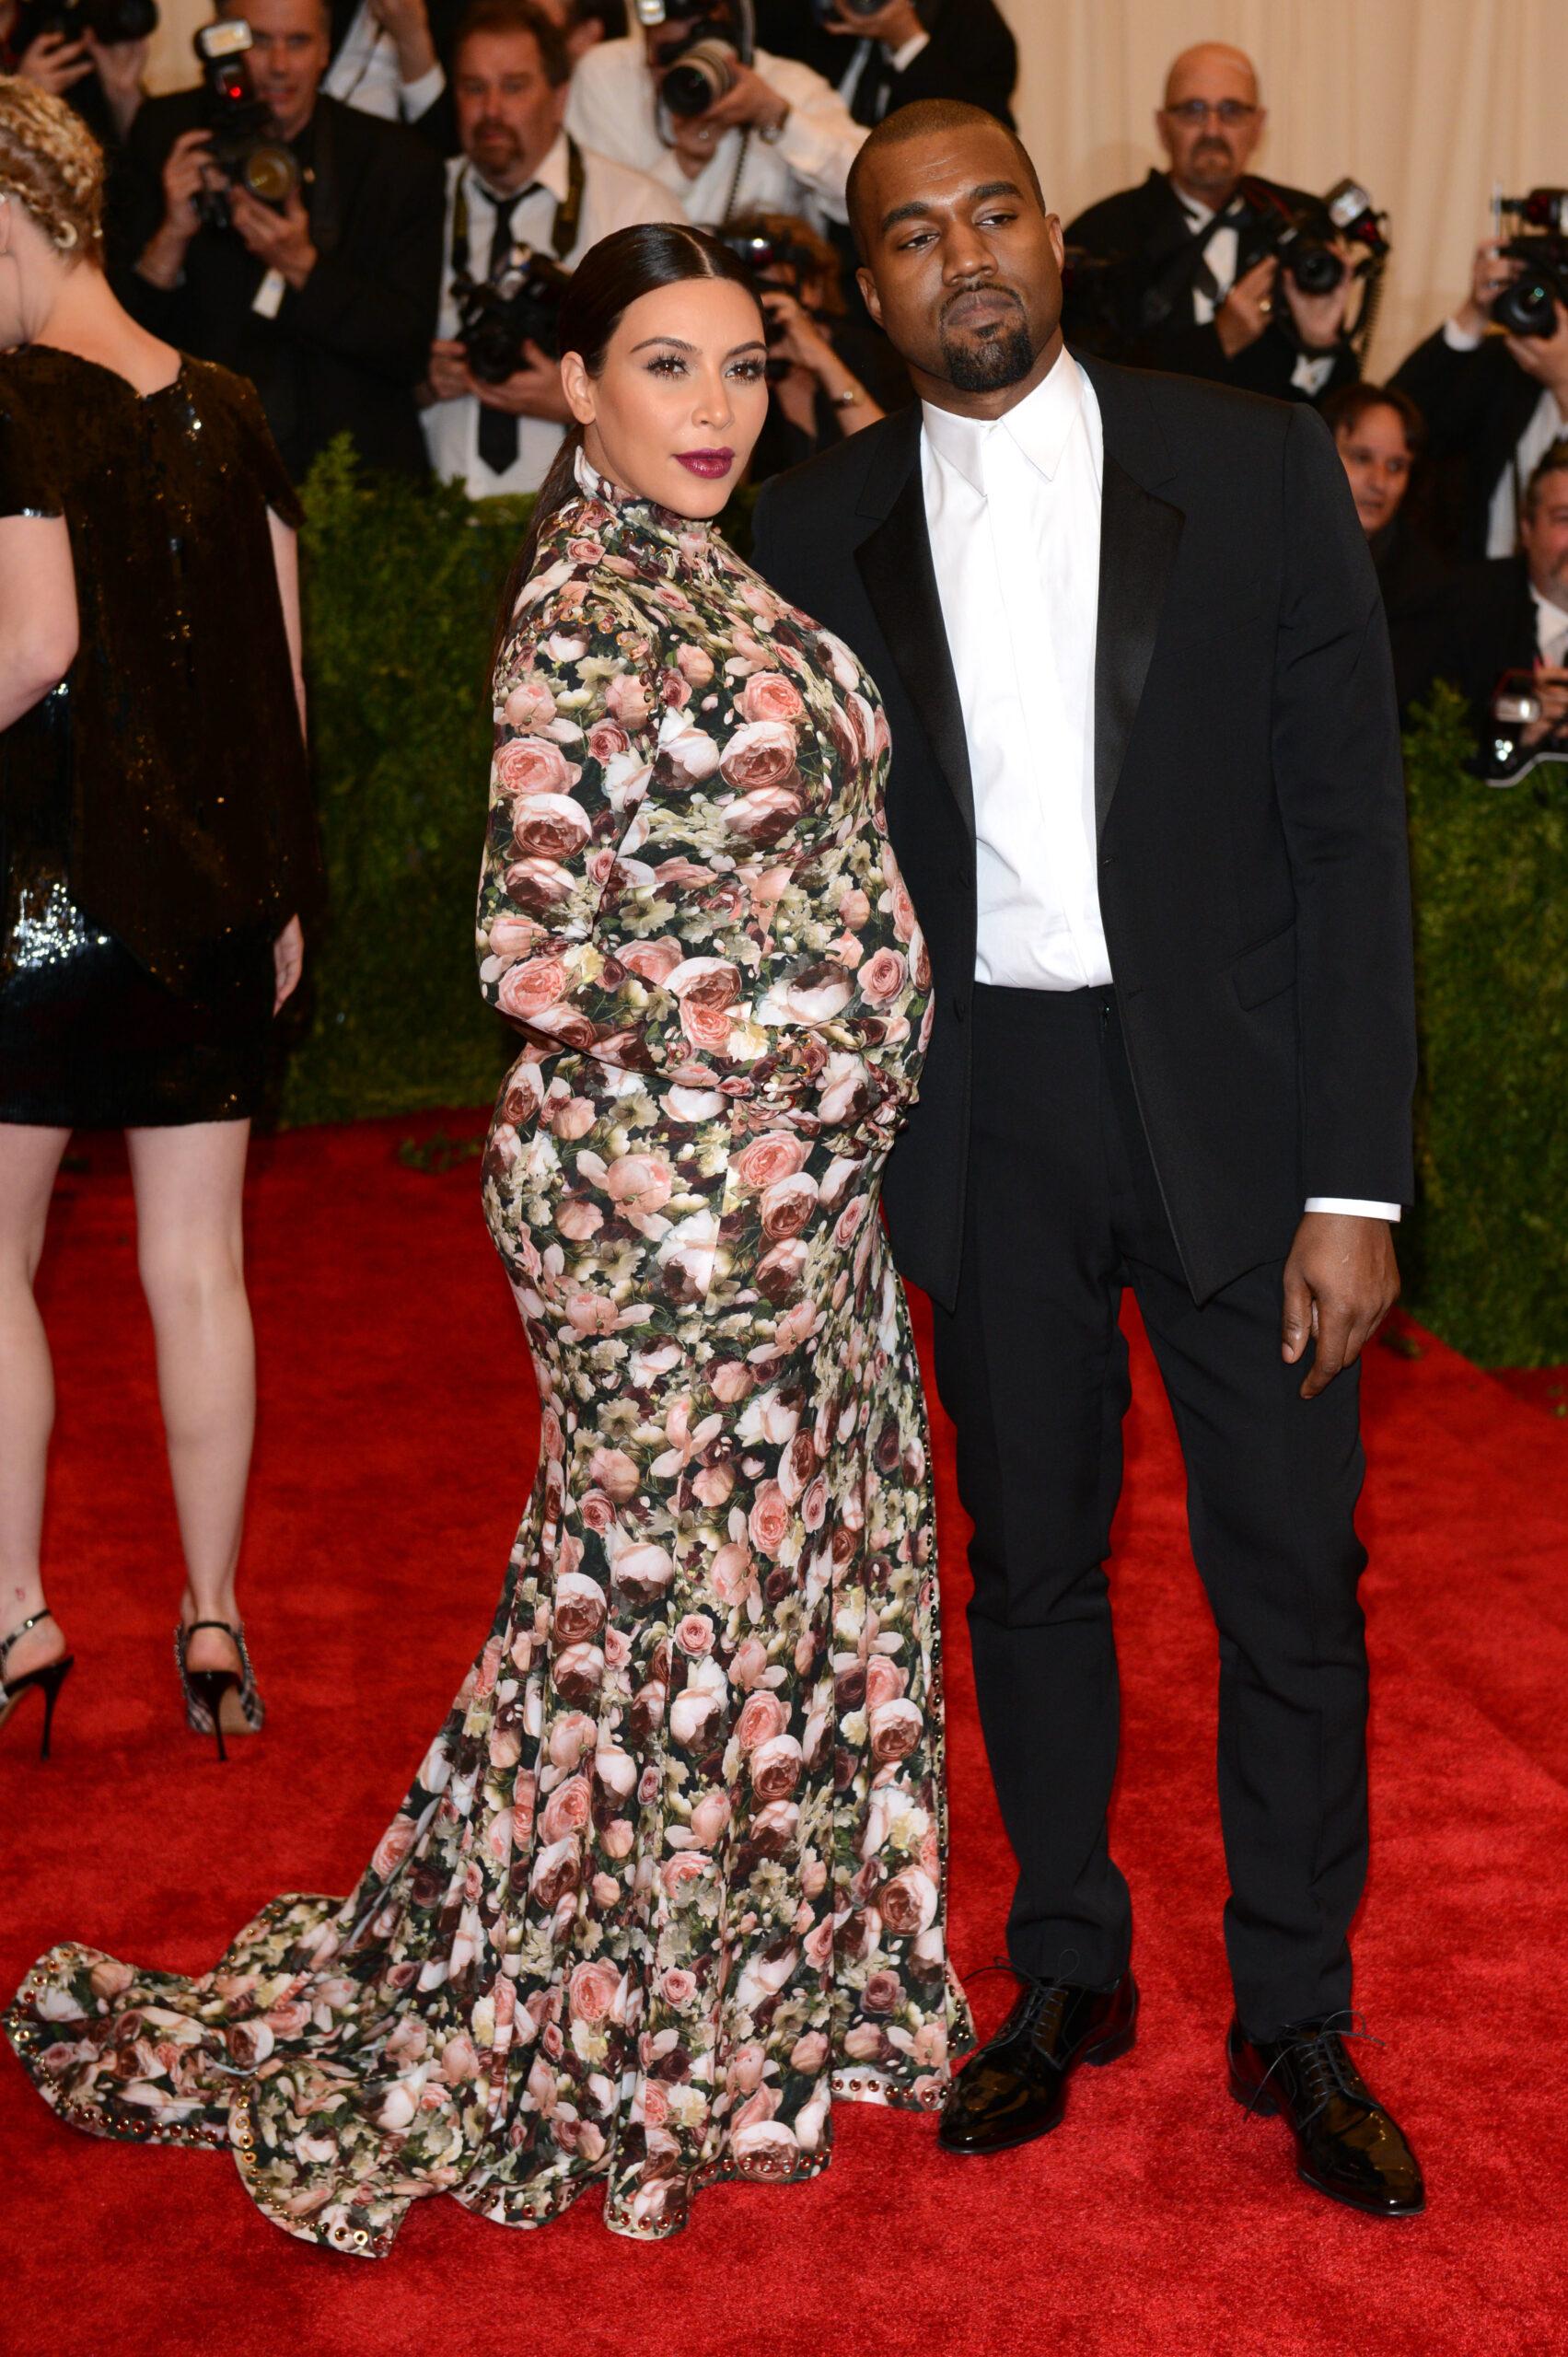 Kanye West Raps His Marital Home With Kim Kardashian Was 'Jail?!'